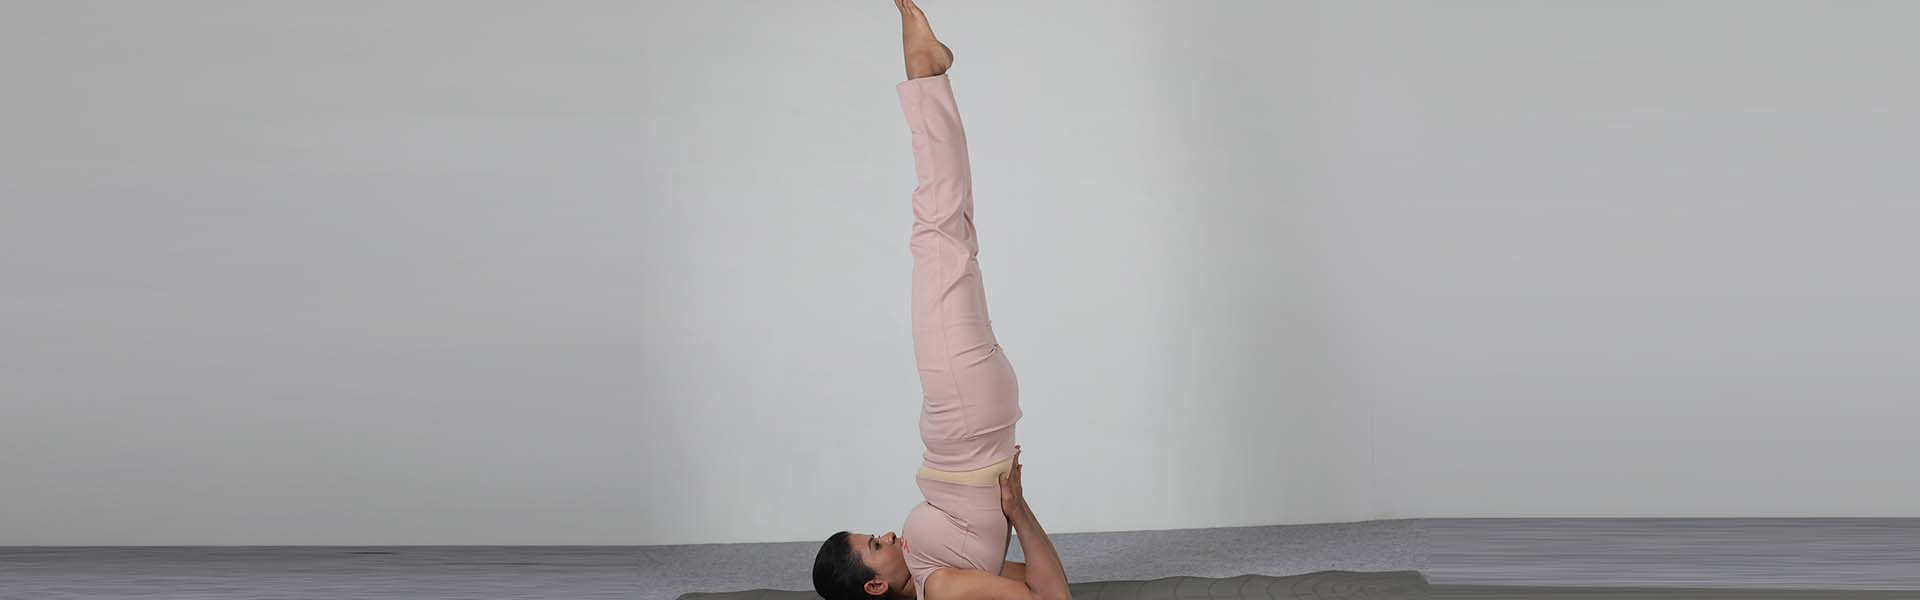 Every Body Thrive - Strike a Pose | Yoga benefits, Poses, Yoga poses